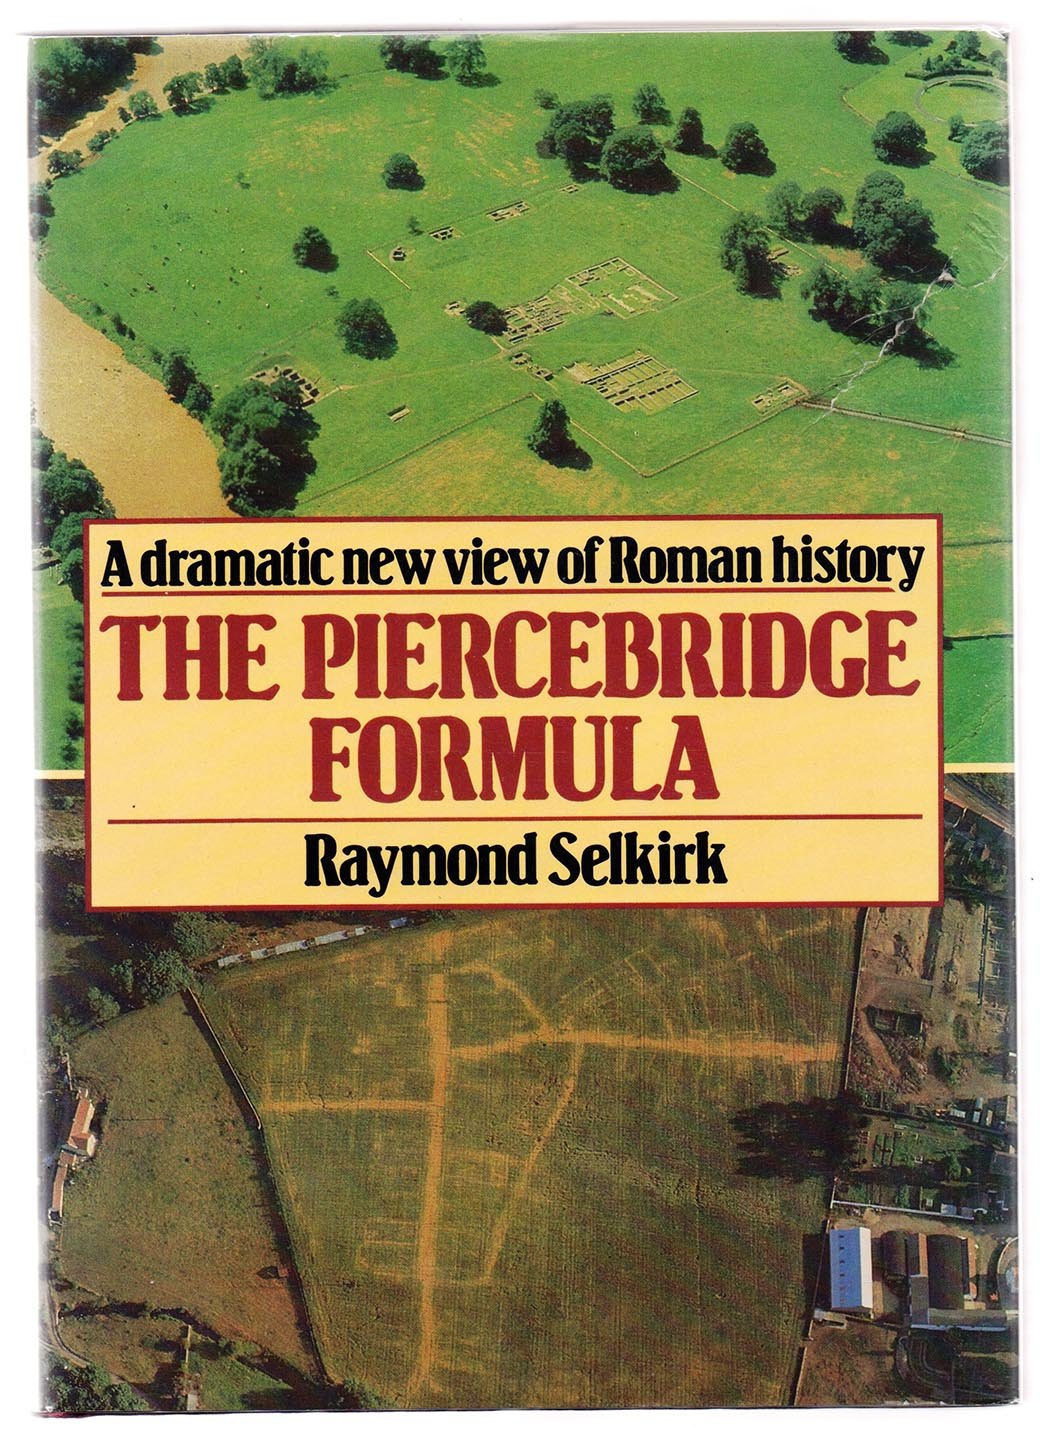 The Piercebridge Formula: A Dramatic New View of Roman History